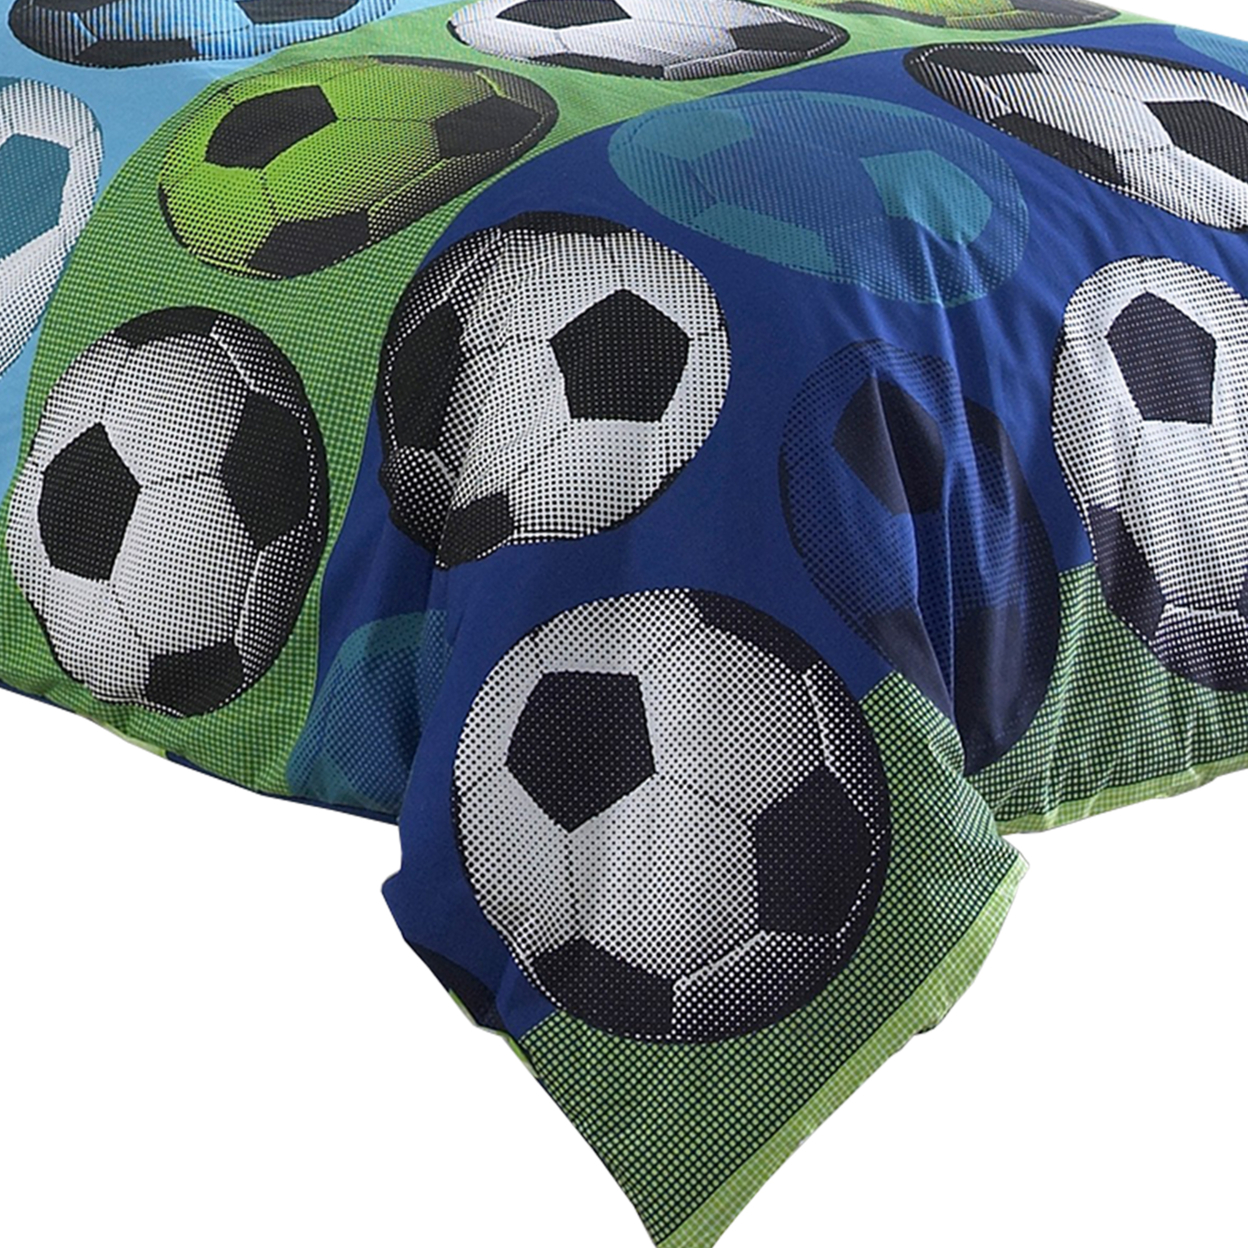 4 Piece Full Size Comforter Set With Soccer Theme, Multicolor- Saltoro Sherpi